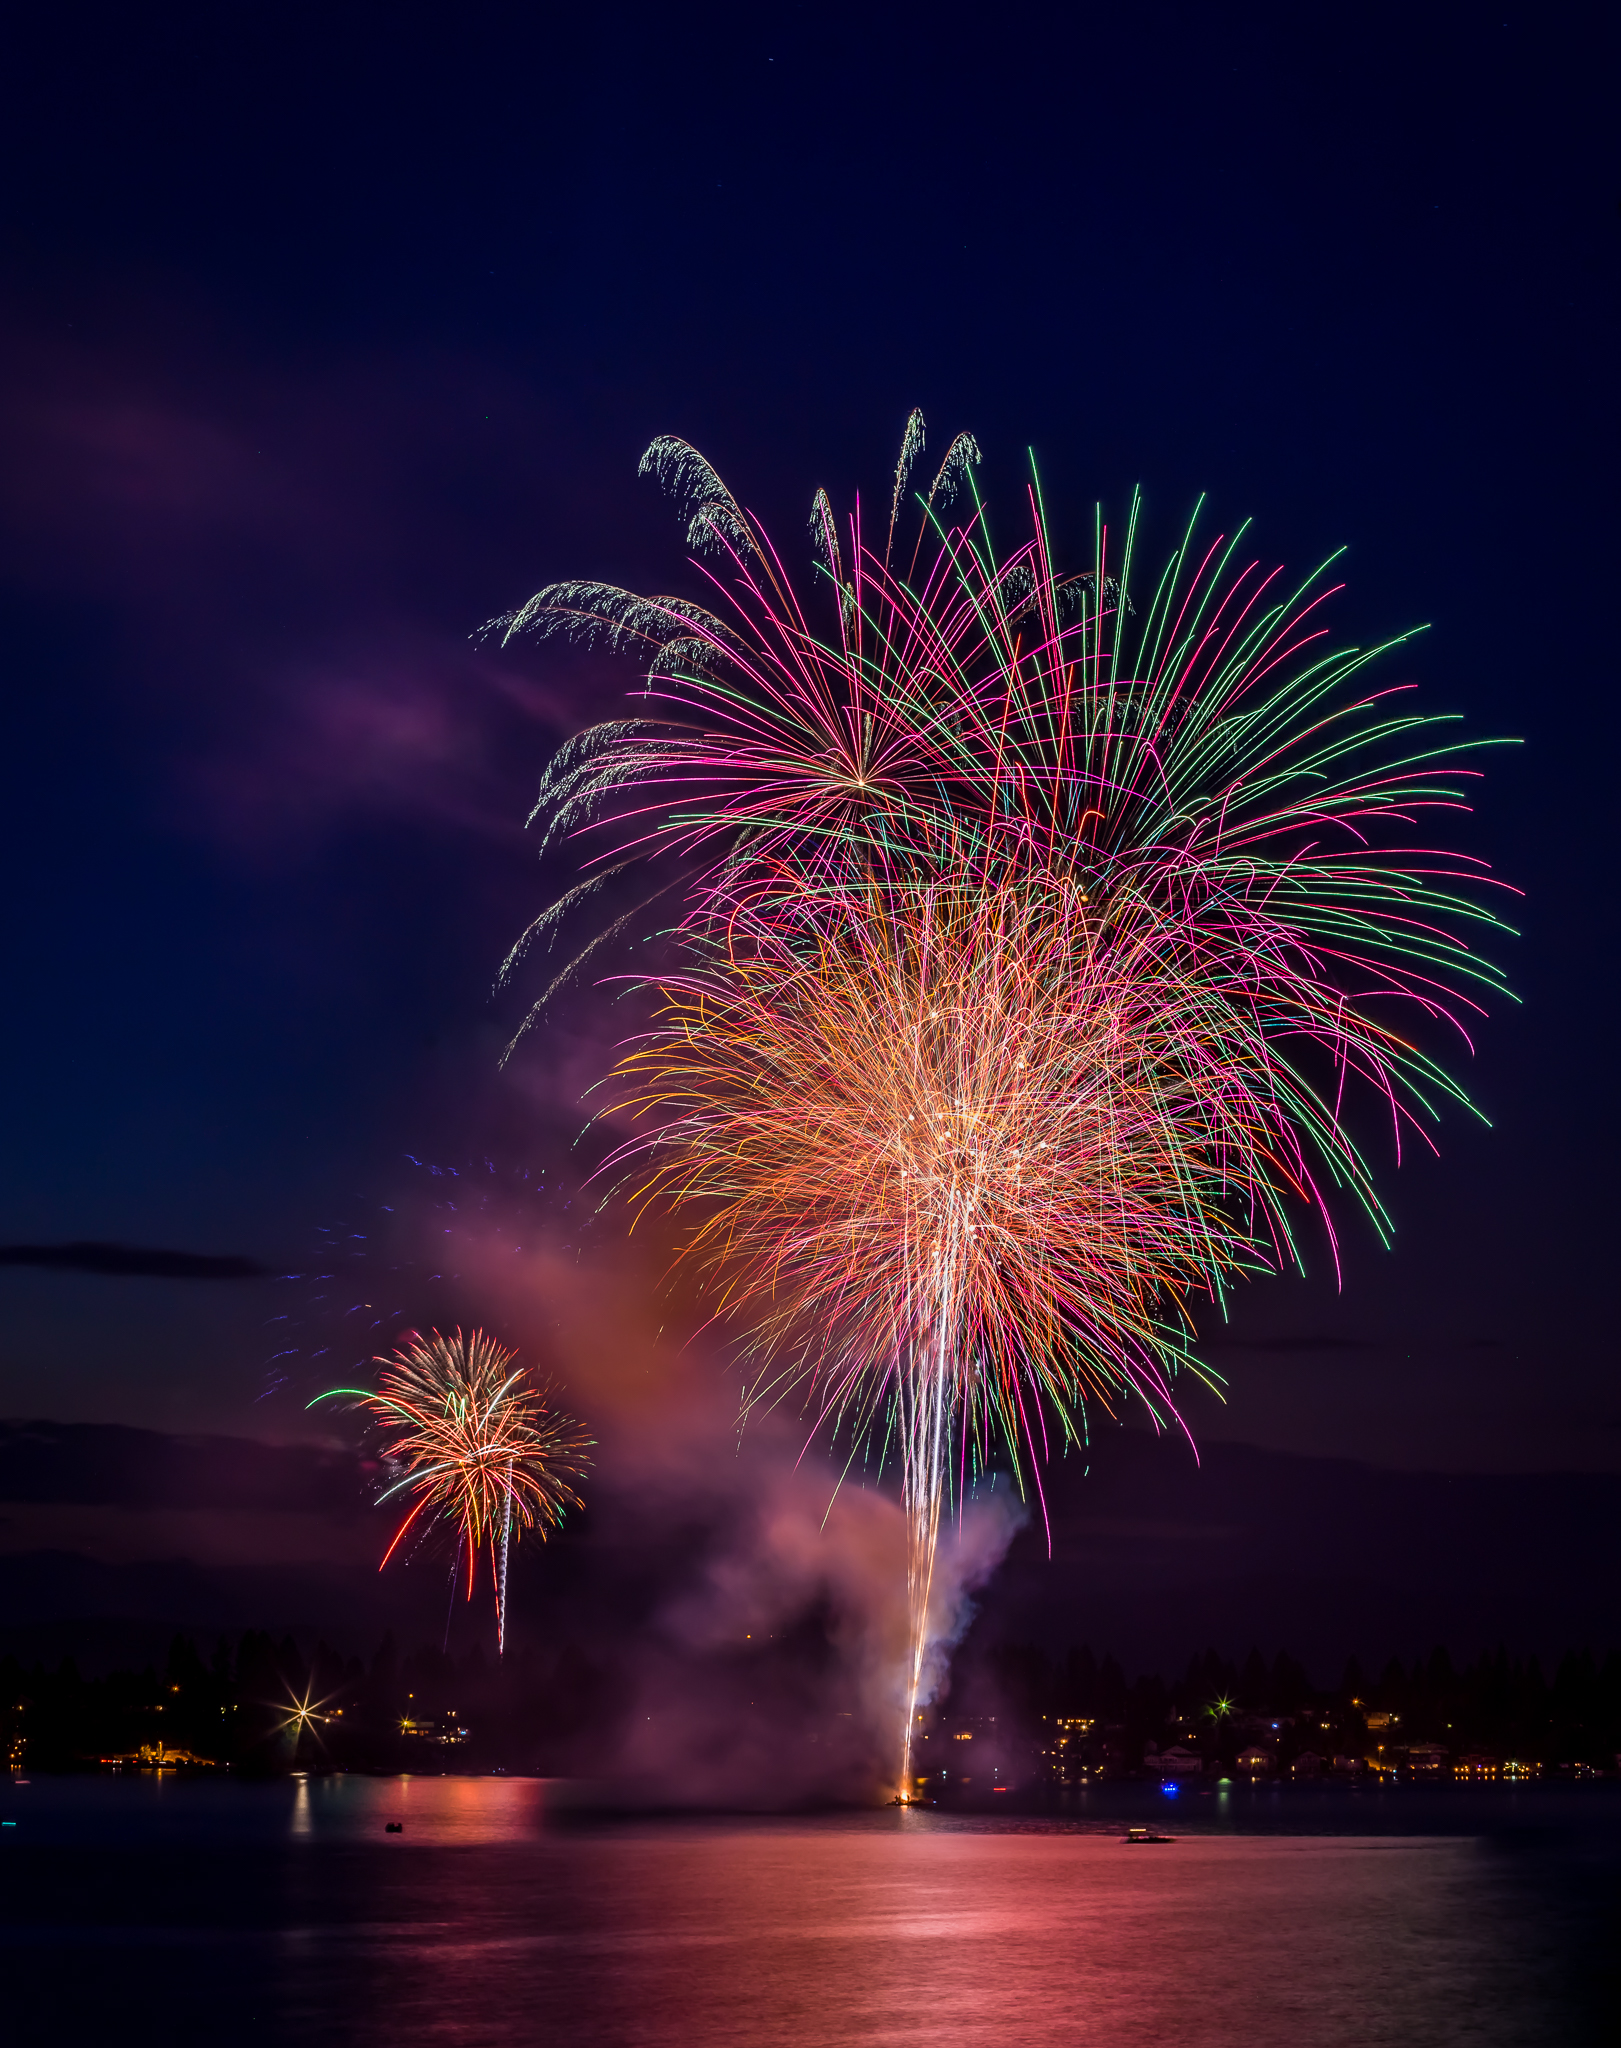  Fireworks over Liberty Lake, Washington July 4th, 2015 